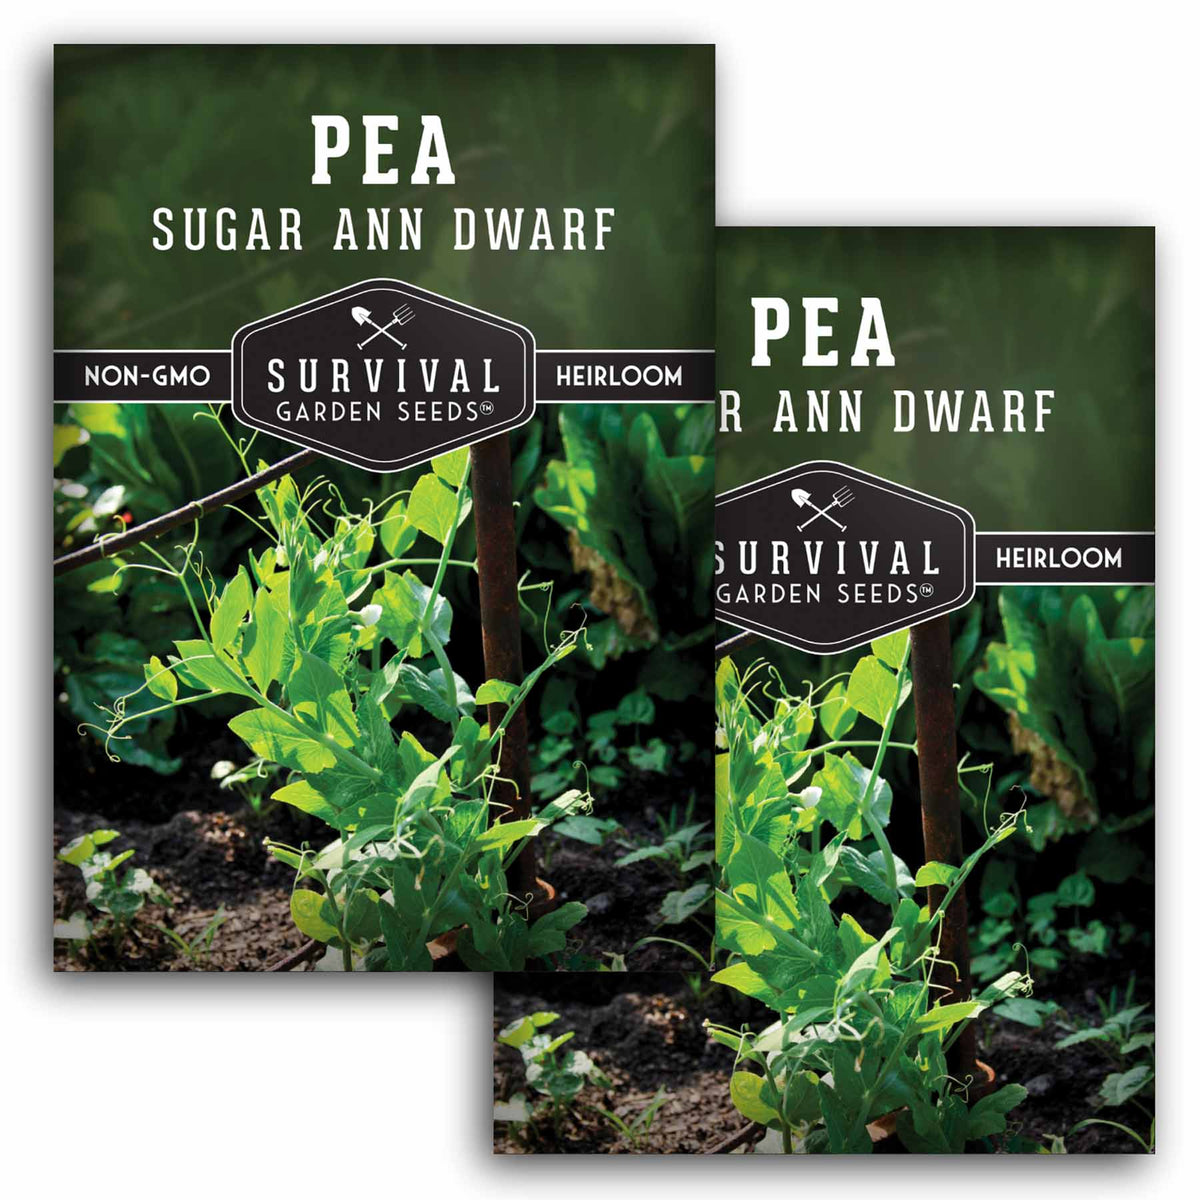 2 packet of Sugar Ann Dwarf Pea seeds